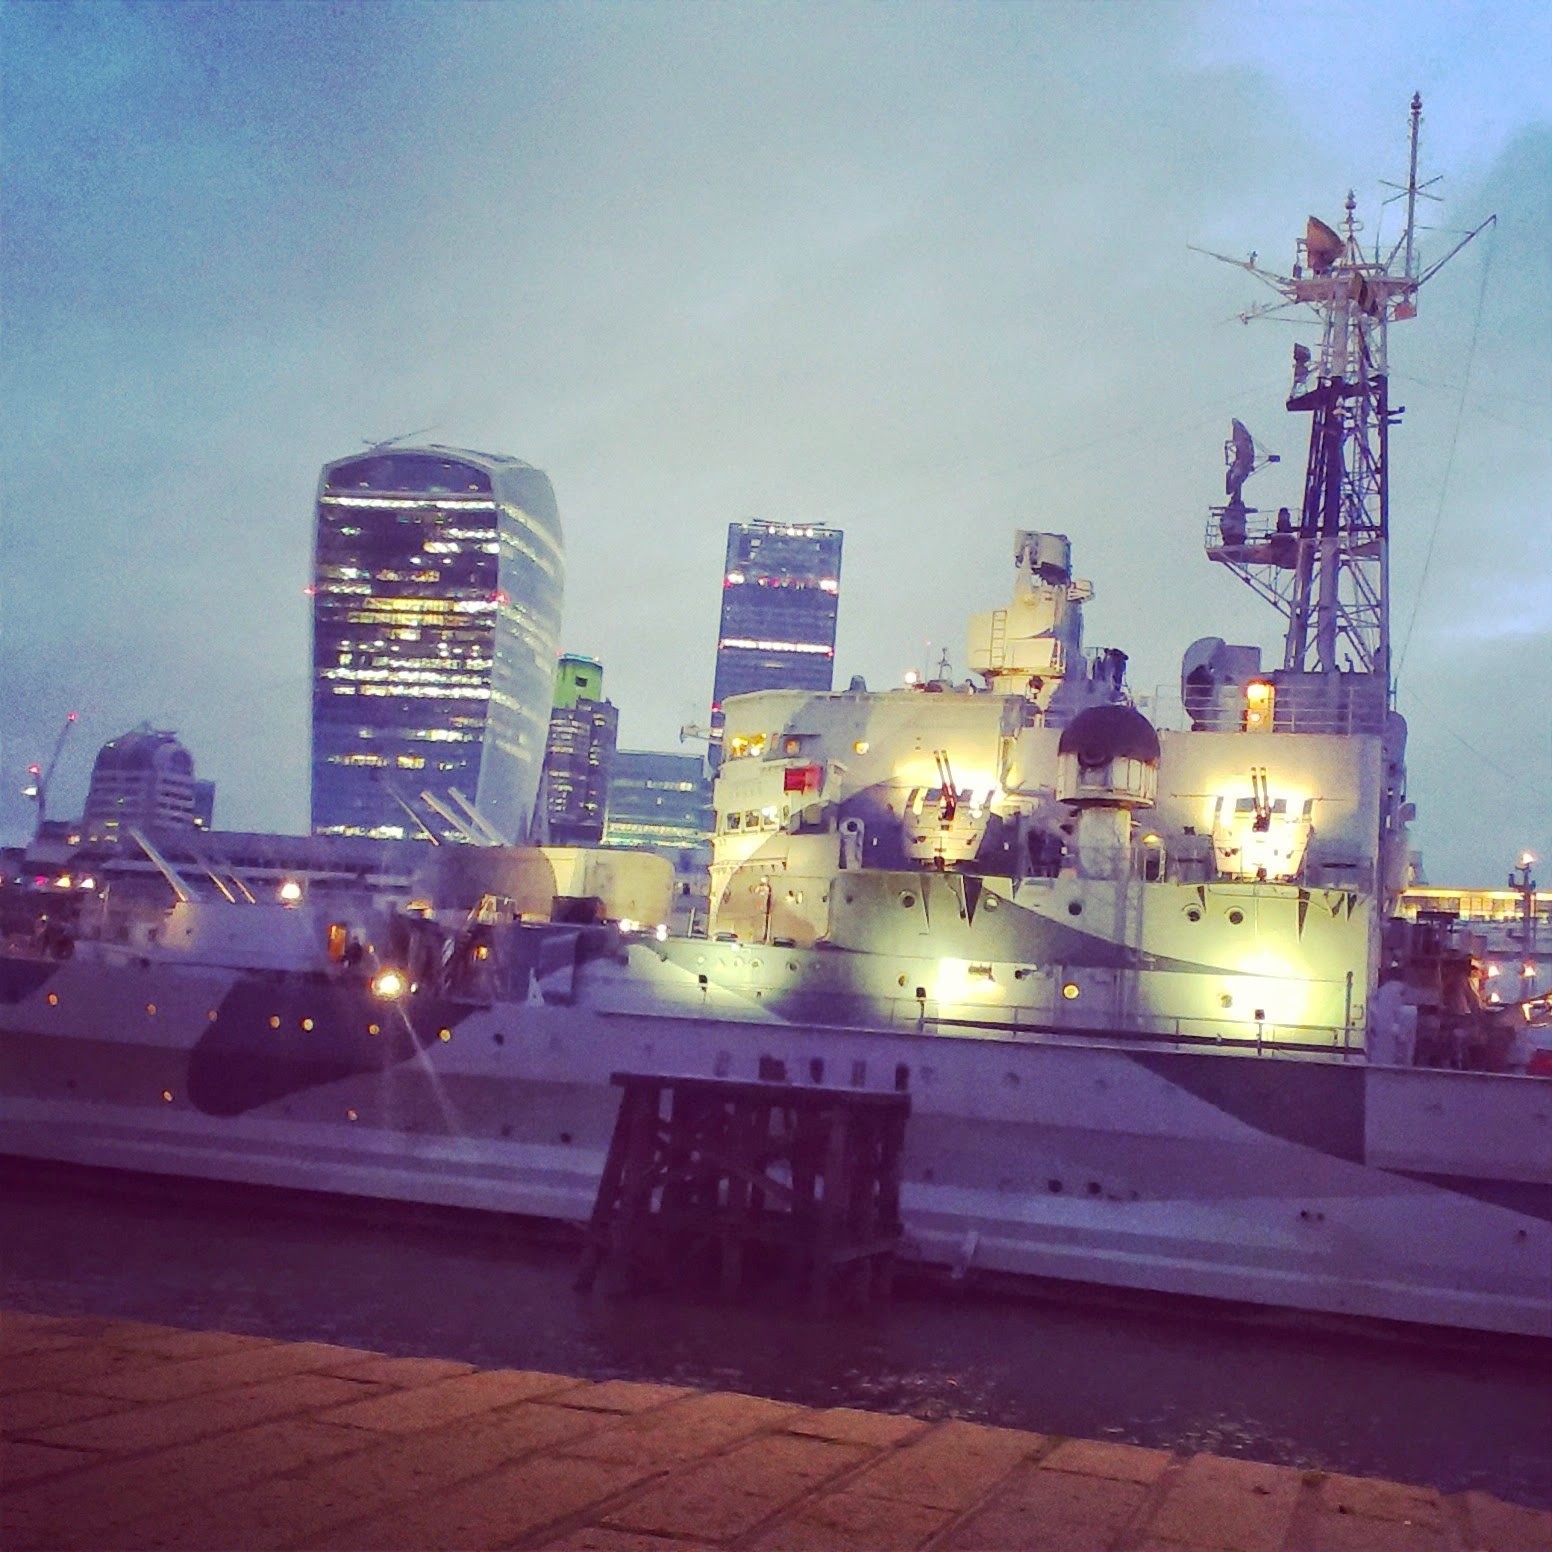 4pm - HMS Belfast